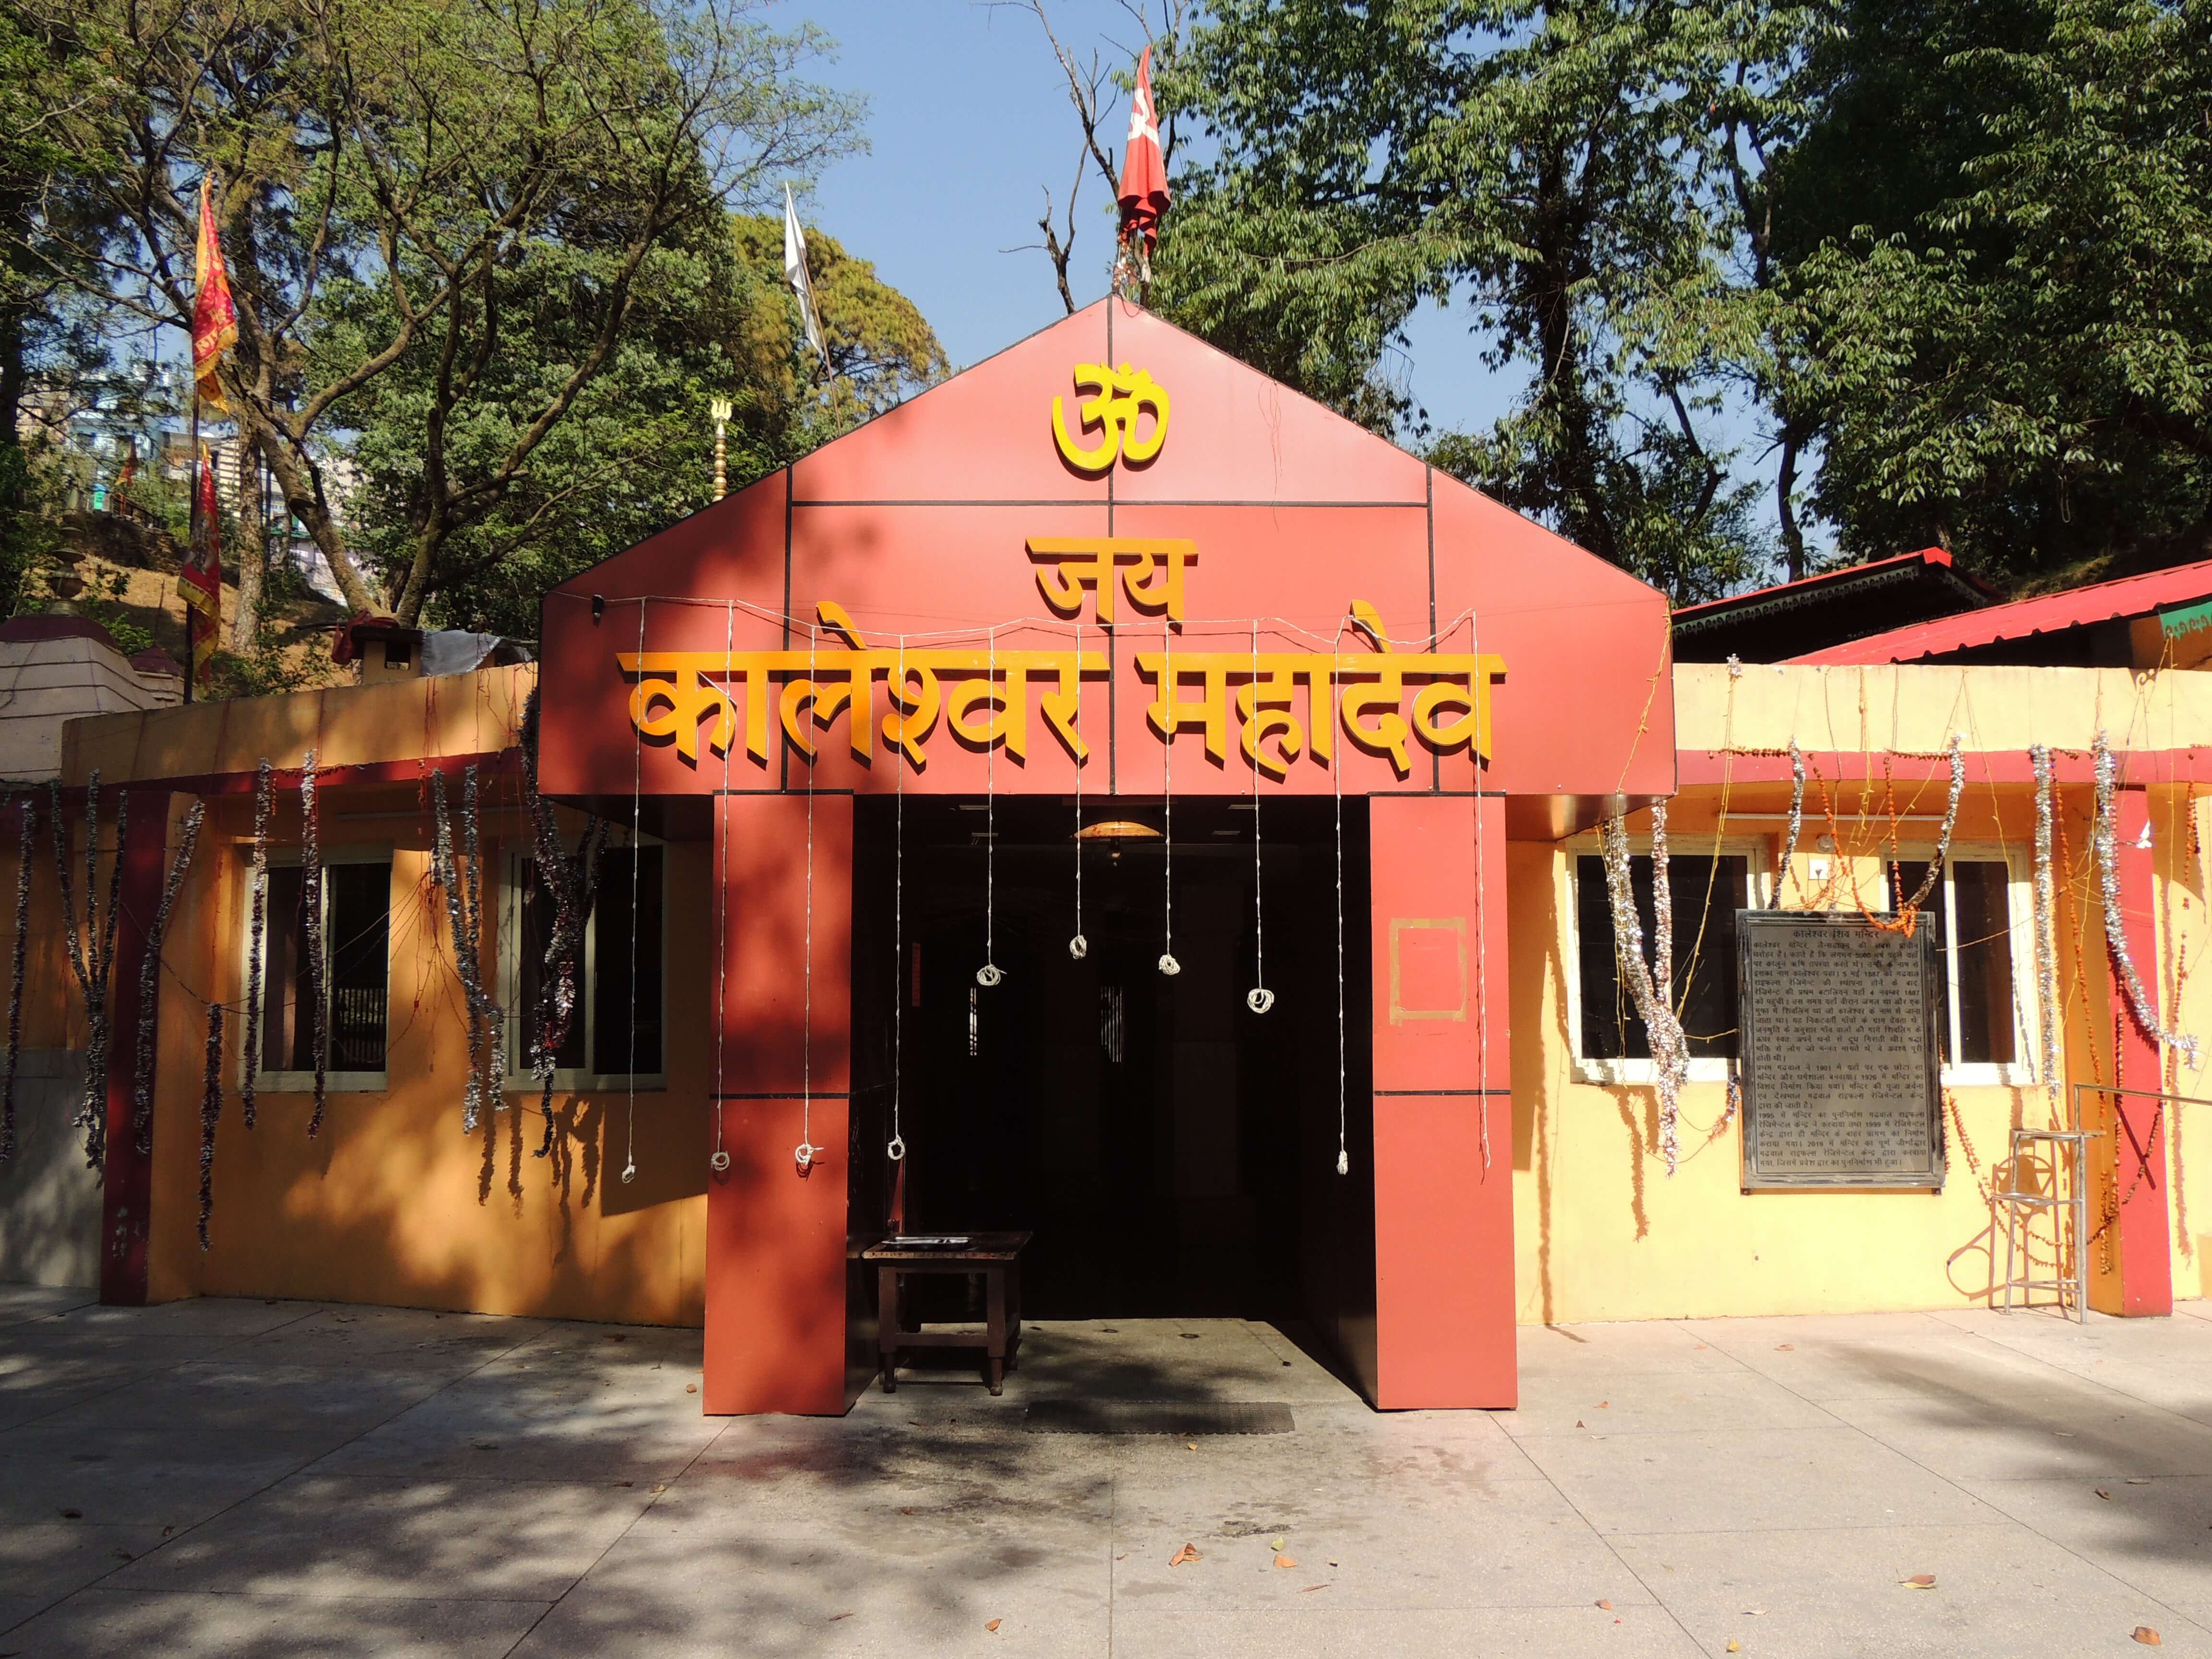 Kaleshwar Mahadev temple